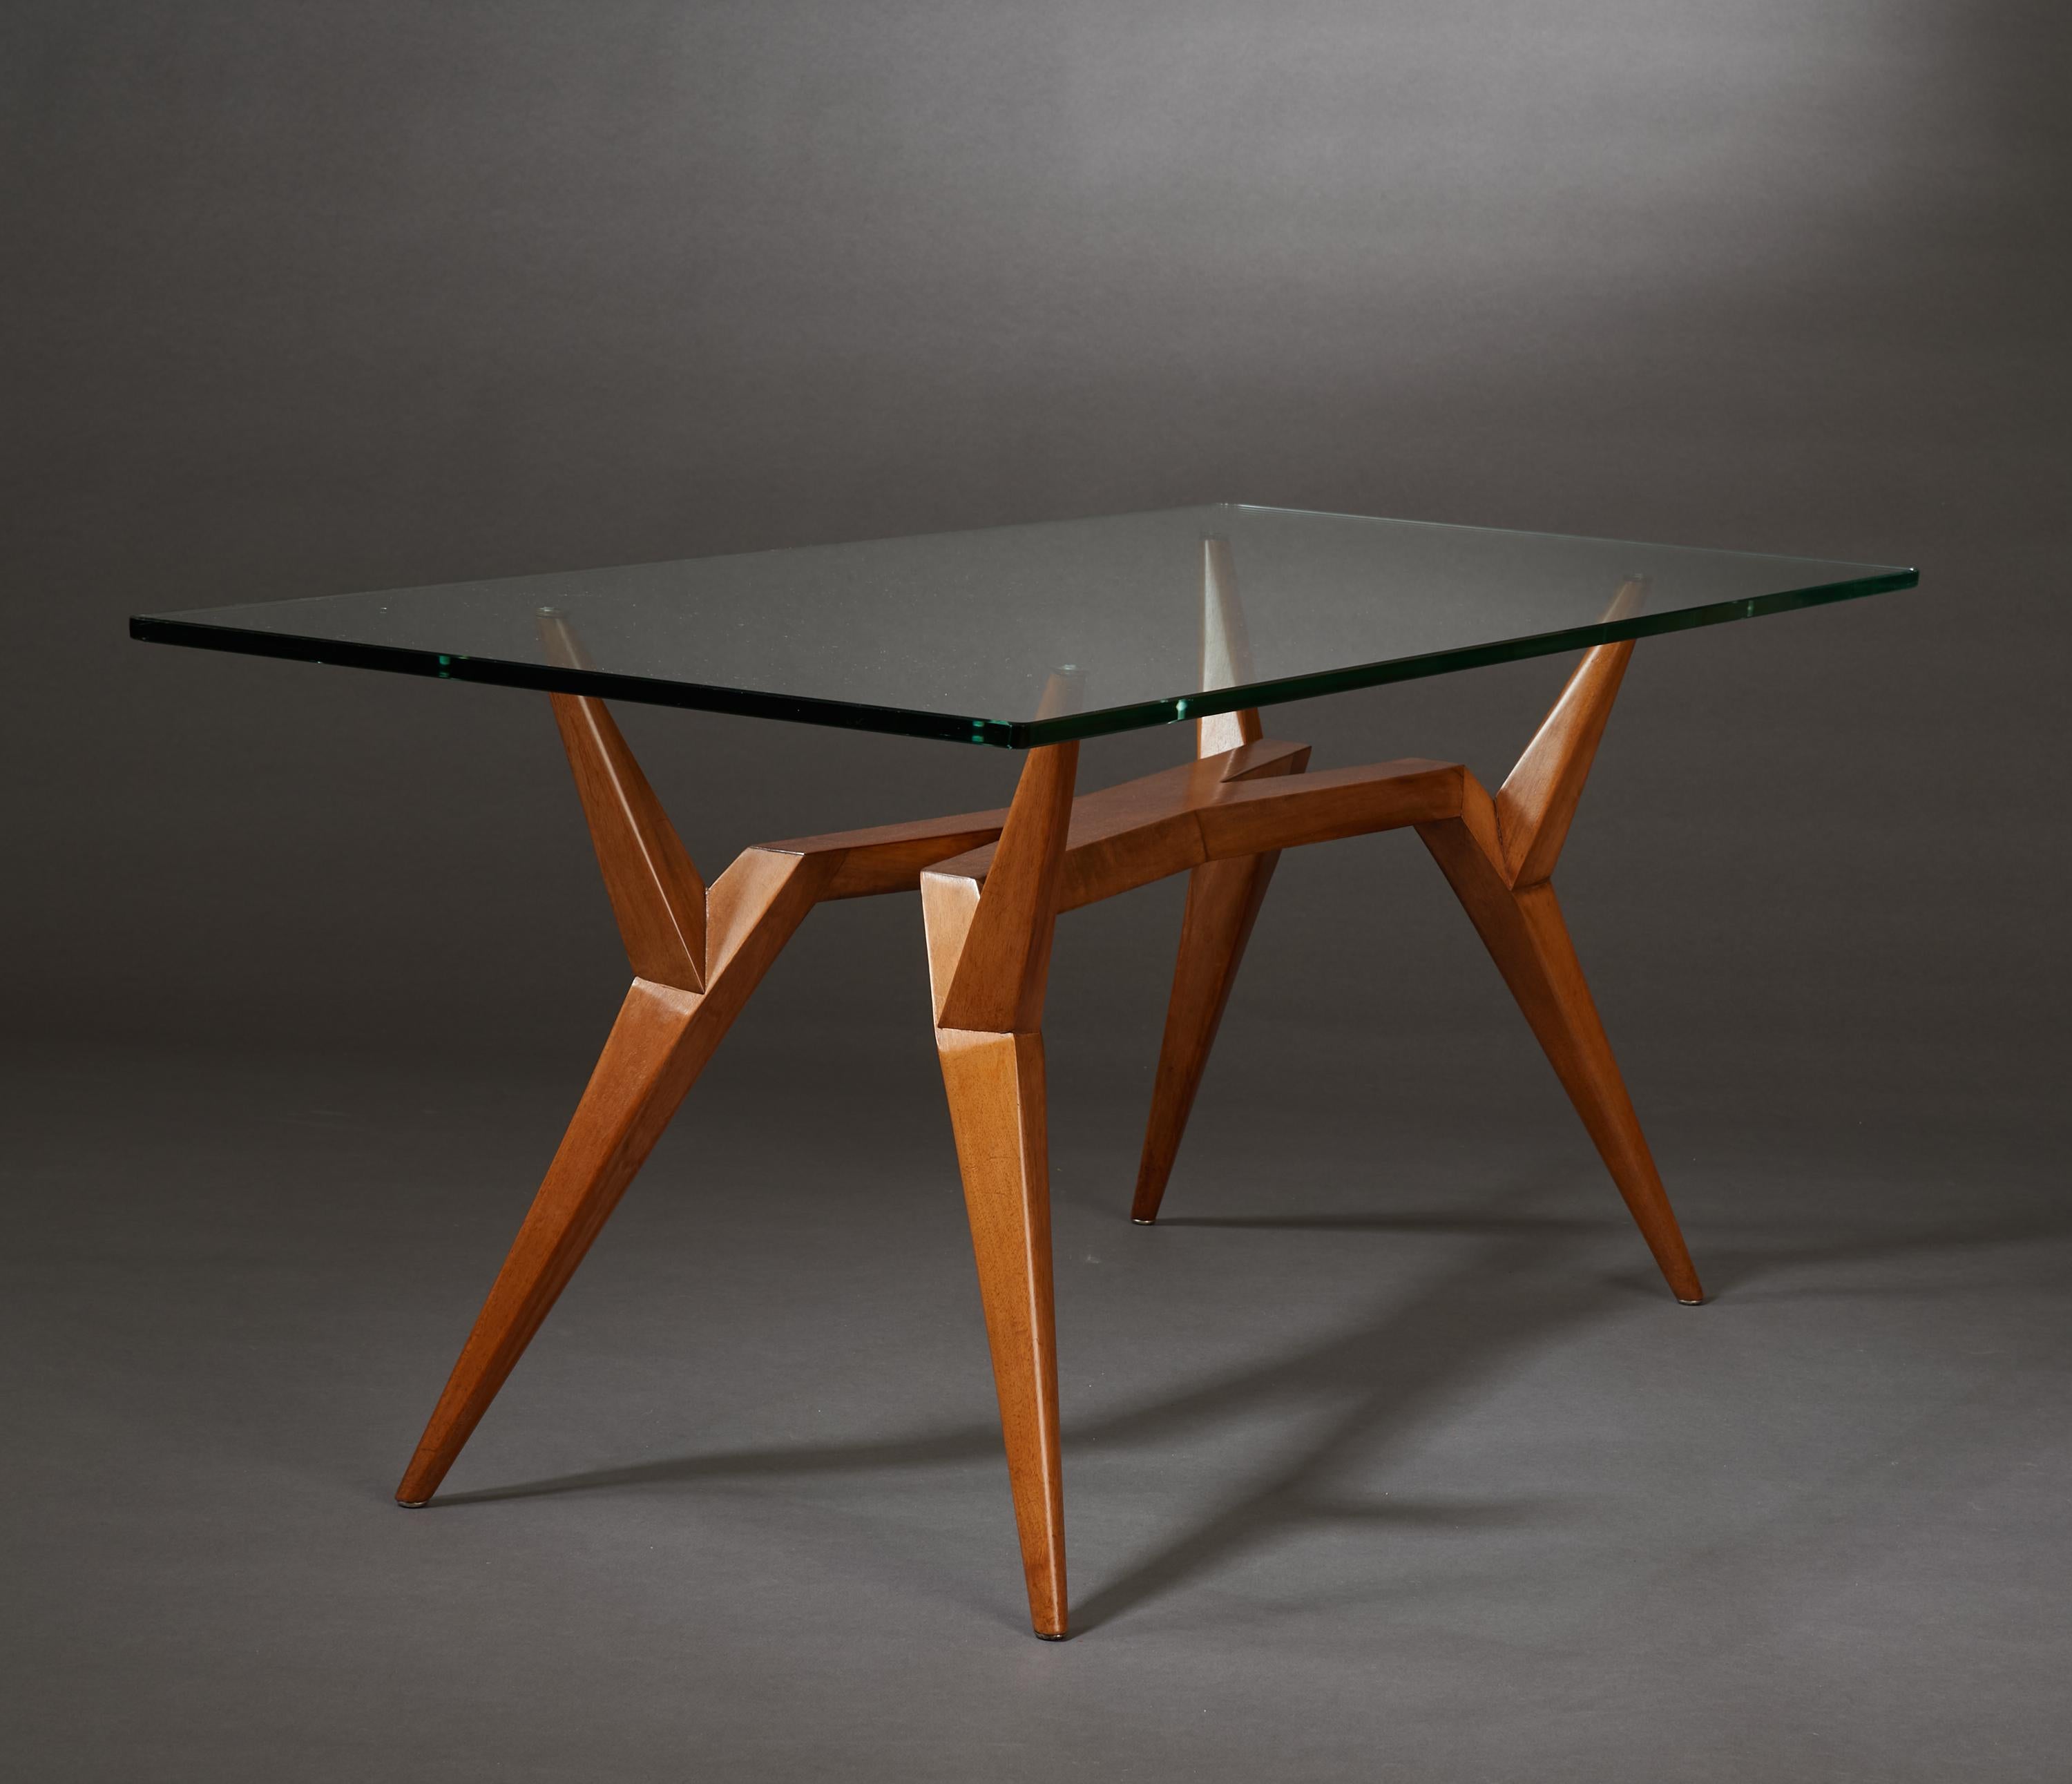 Mid-20th Century Pierluigi Giordani Rare Constructivist Coffee Table in Wood & Glass, Italy 1950s For Sale